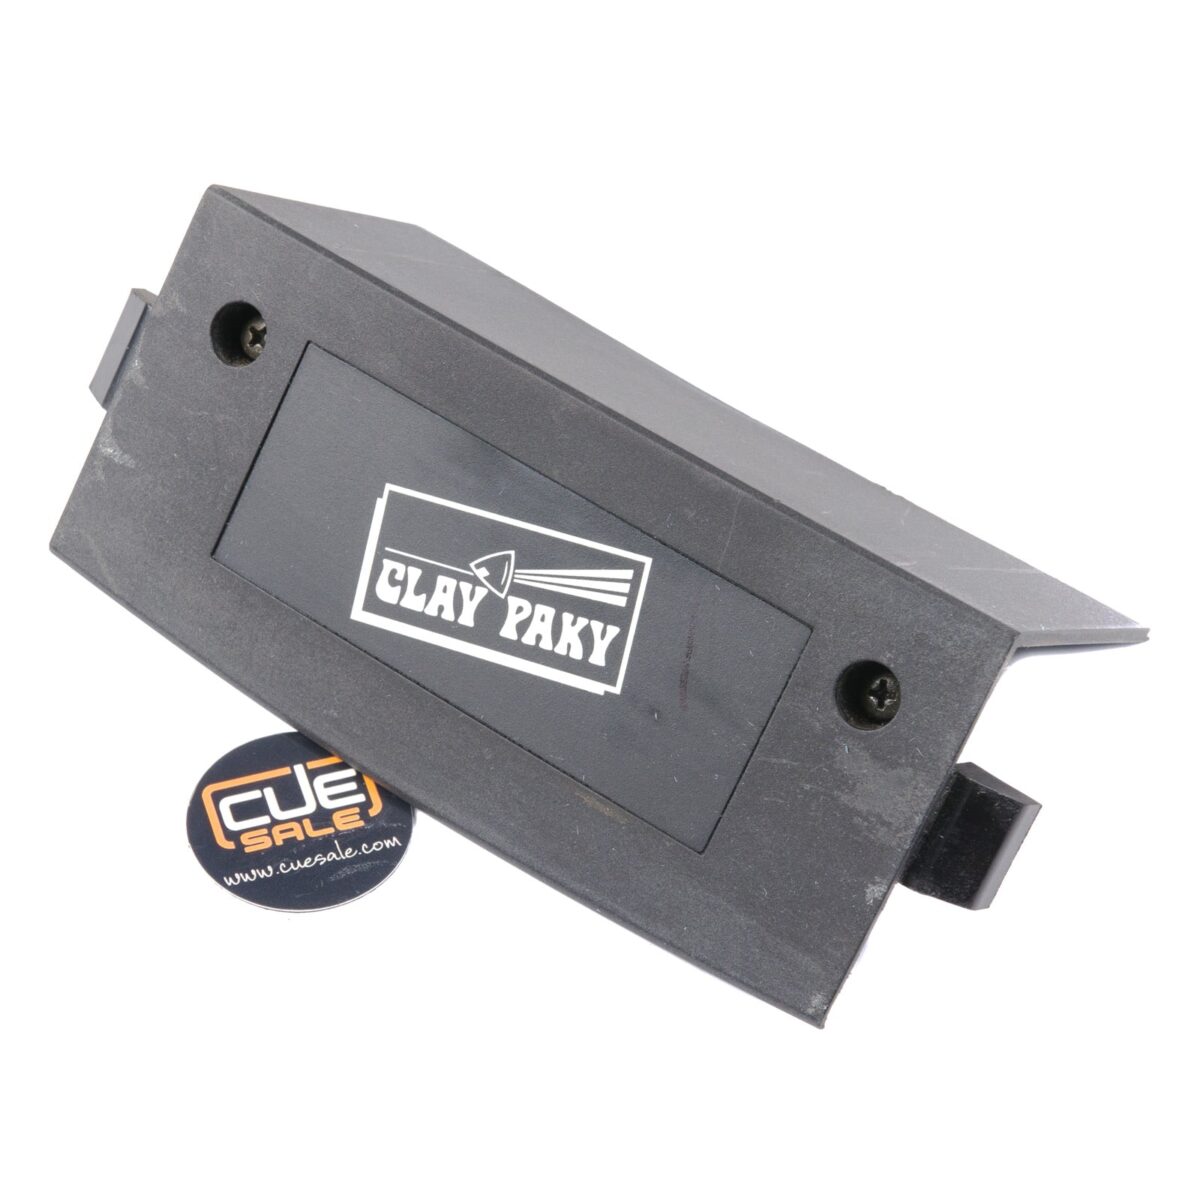 Clay Paky - Plastic central yoke cover Alpha 1500